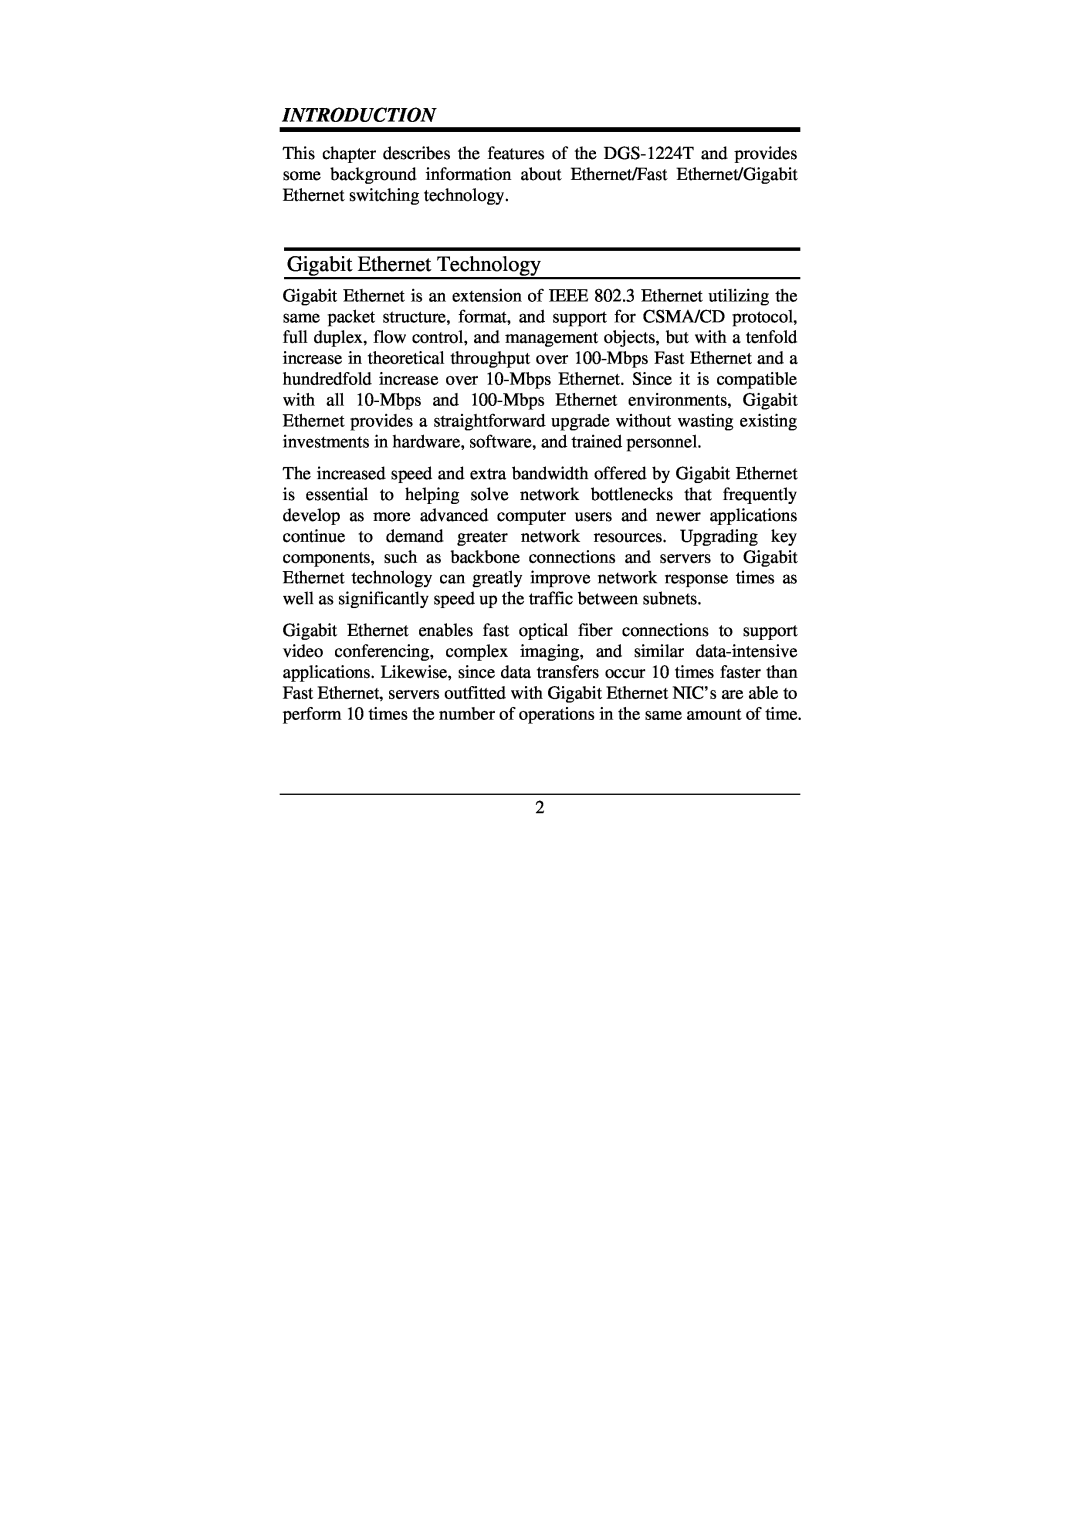 Cisco Systems DGS-1224T manual Gigabit Ethernet Technology, Introduction 